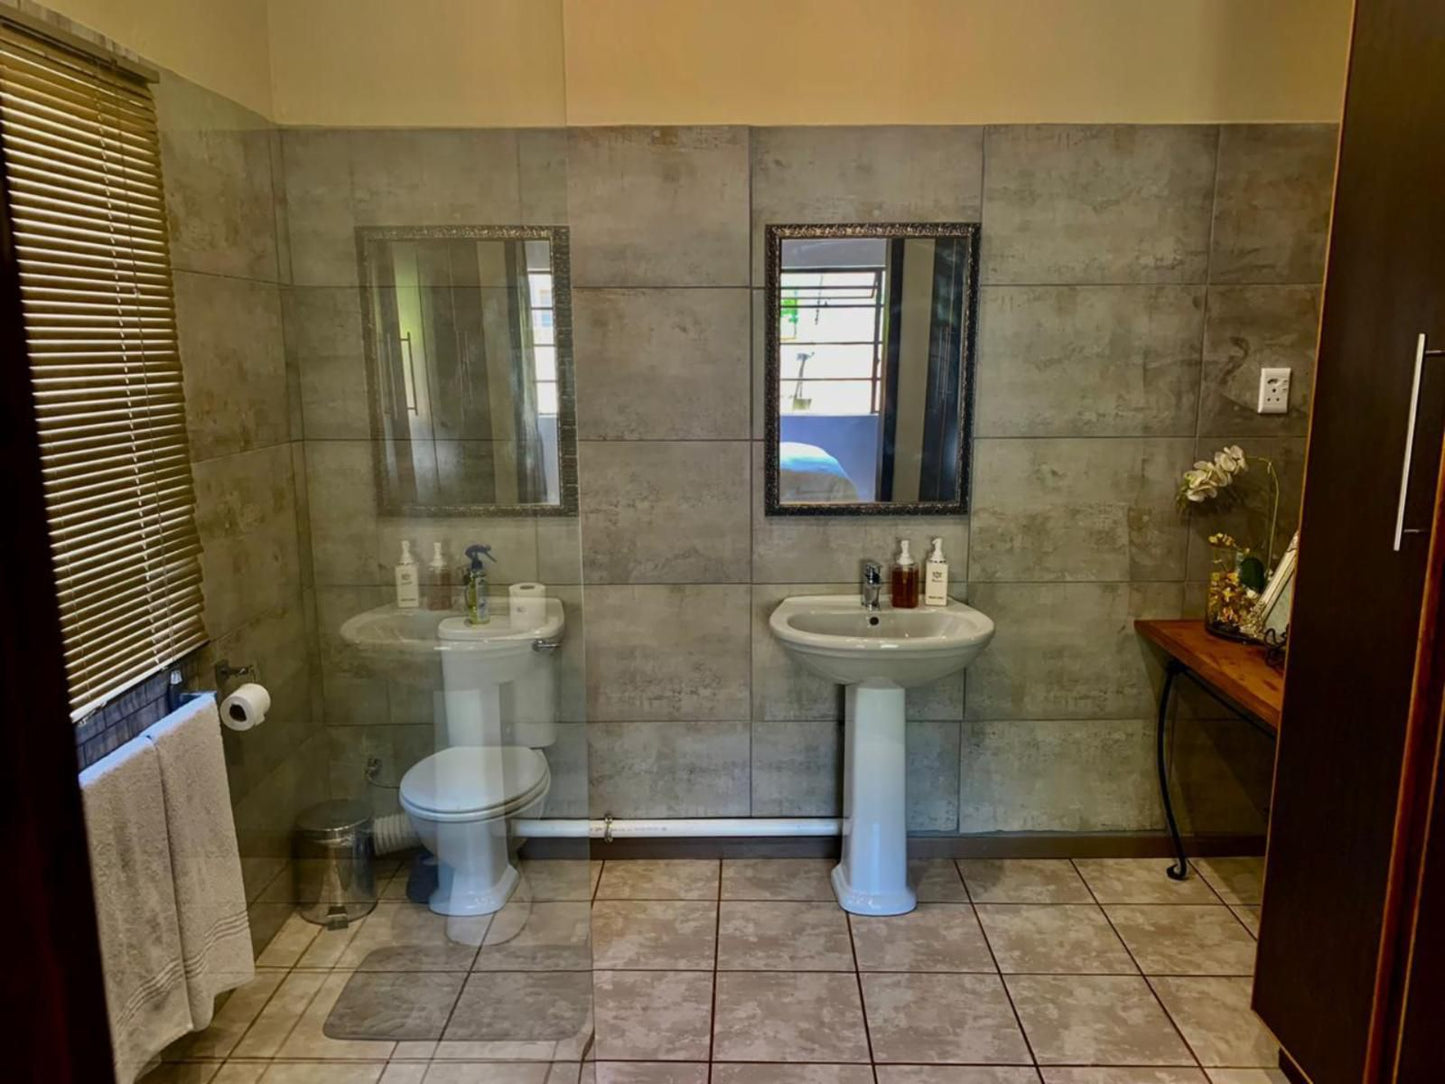 Douglas Villas Aqua Park Tzaneen Tzaneen Limpopo Province South Africa Bathroom